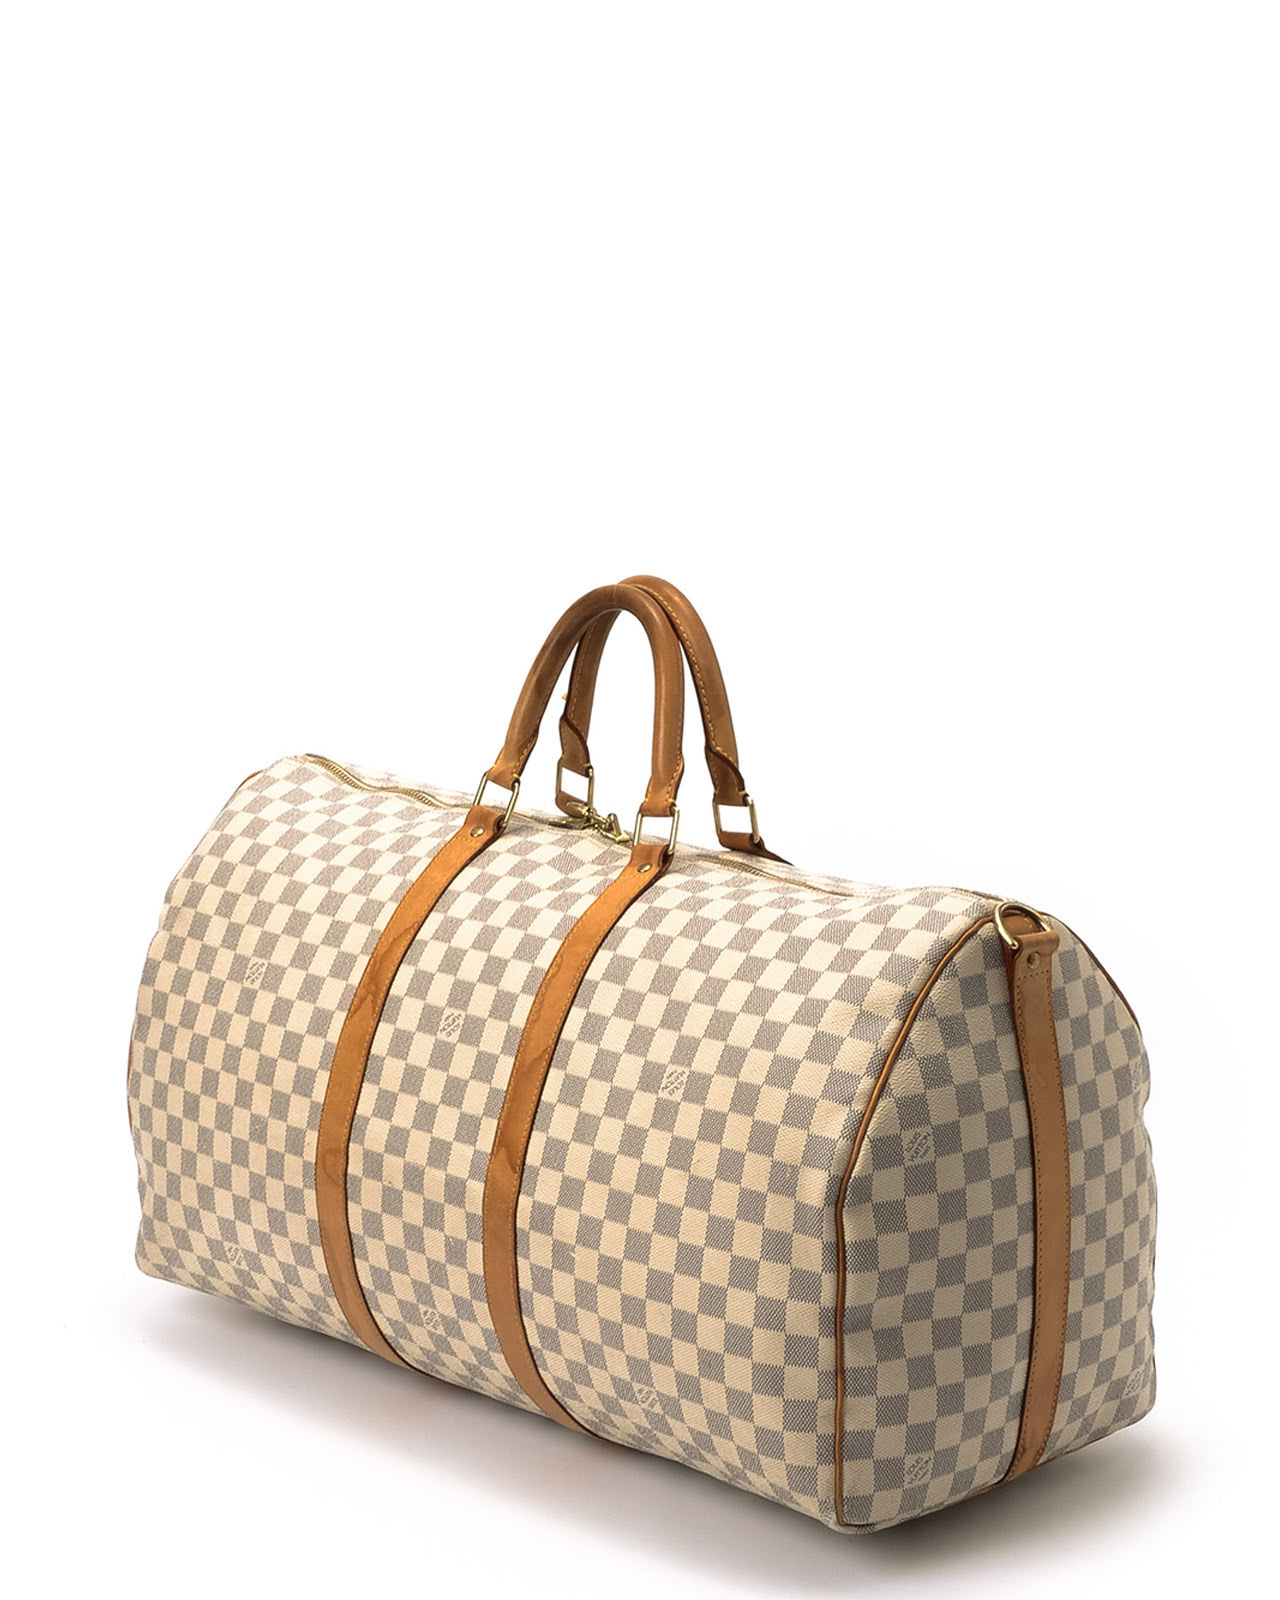 Lyst - Louis Vuitton Damier Azur Keepall 55 Bandou Travel Bag in White